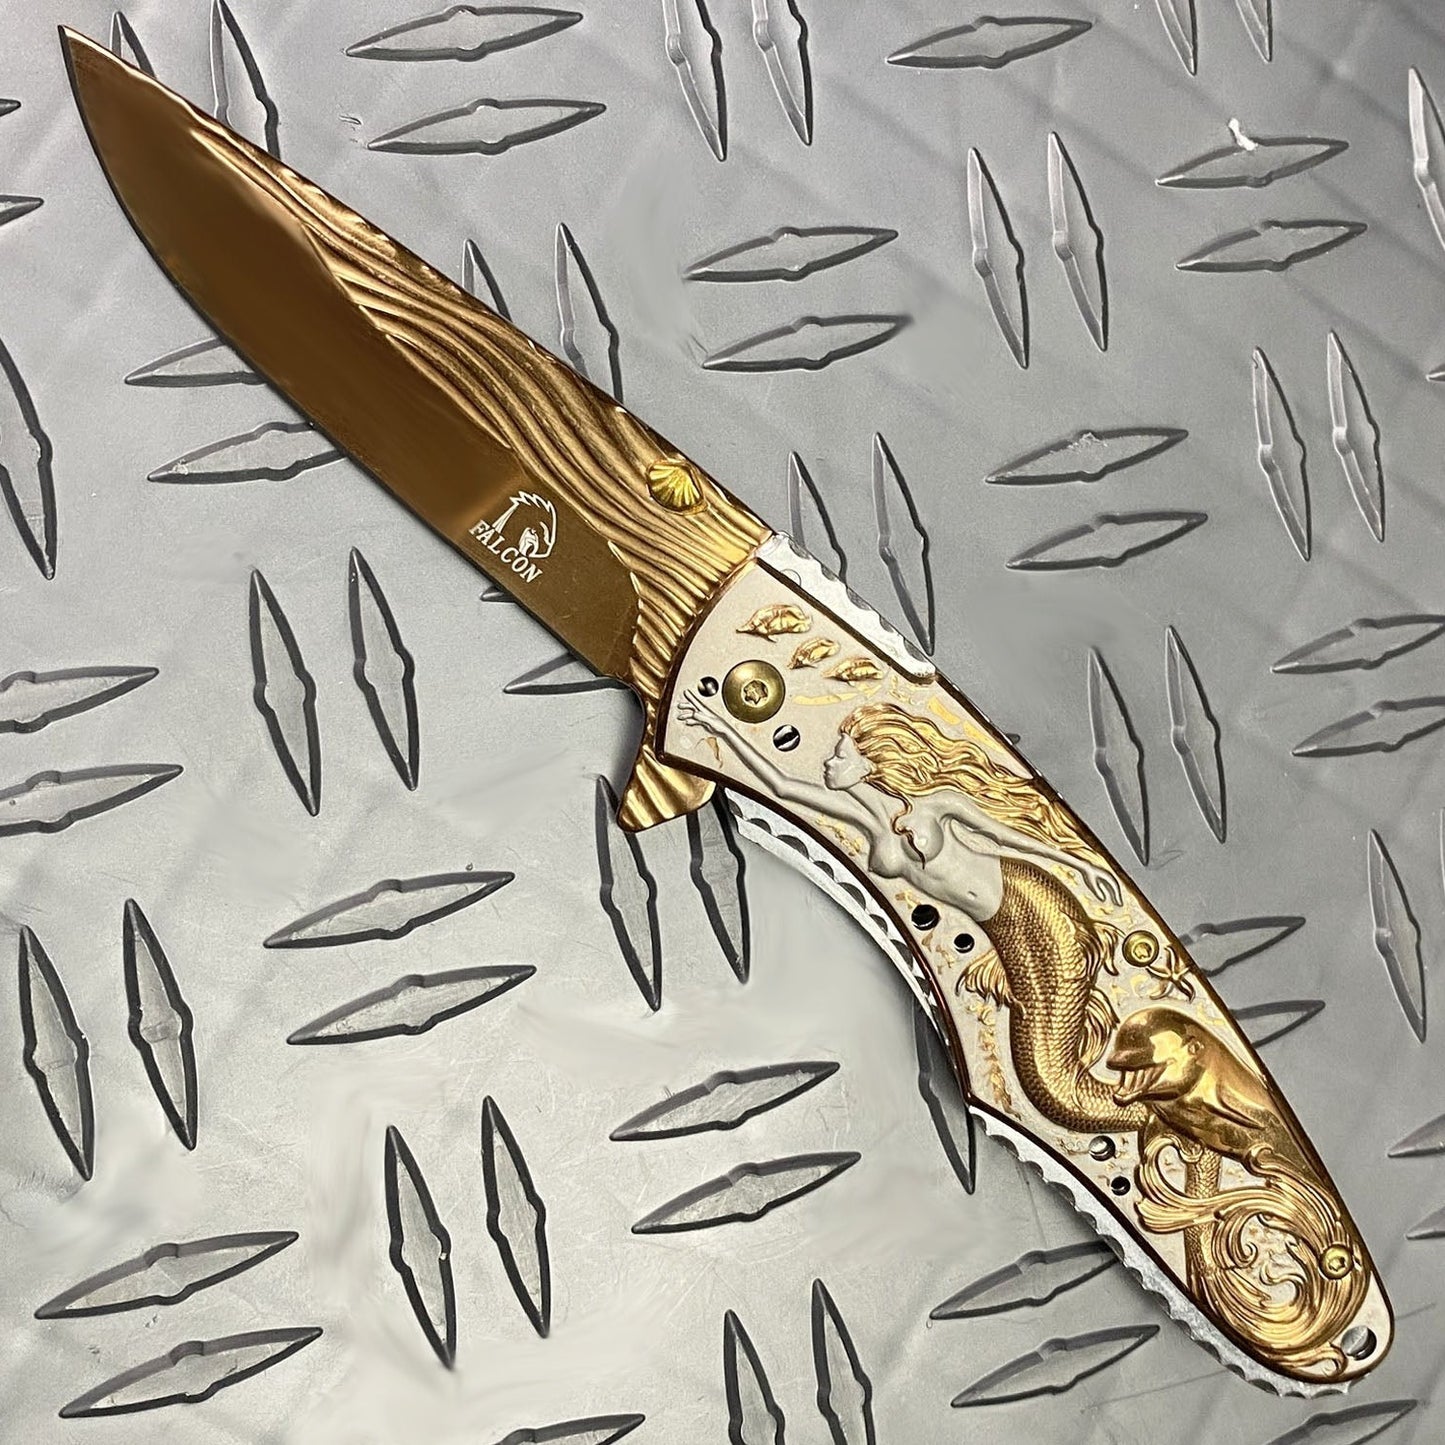 Falcon 8" Overall Knife W/ Gold Mermaid Design